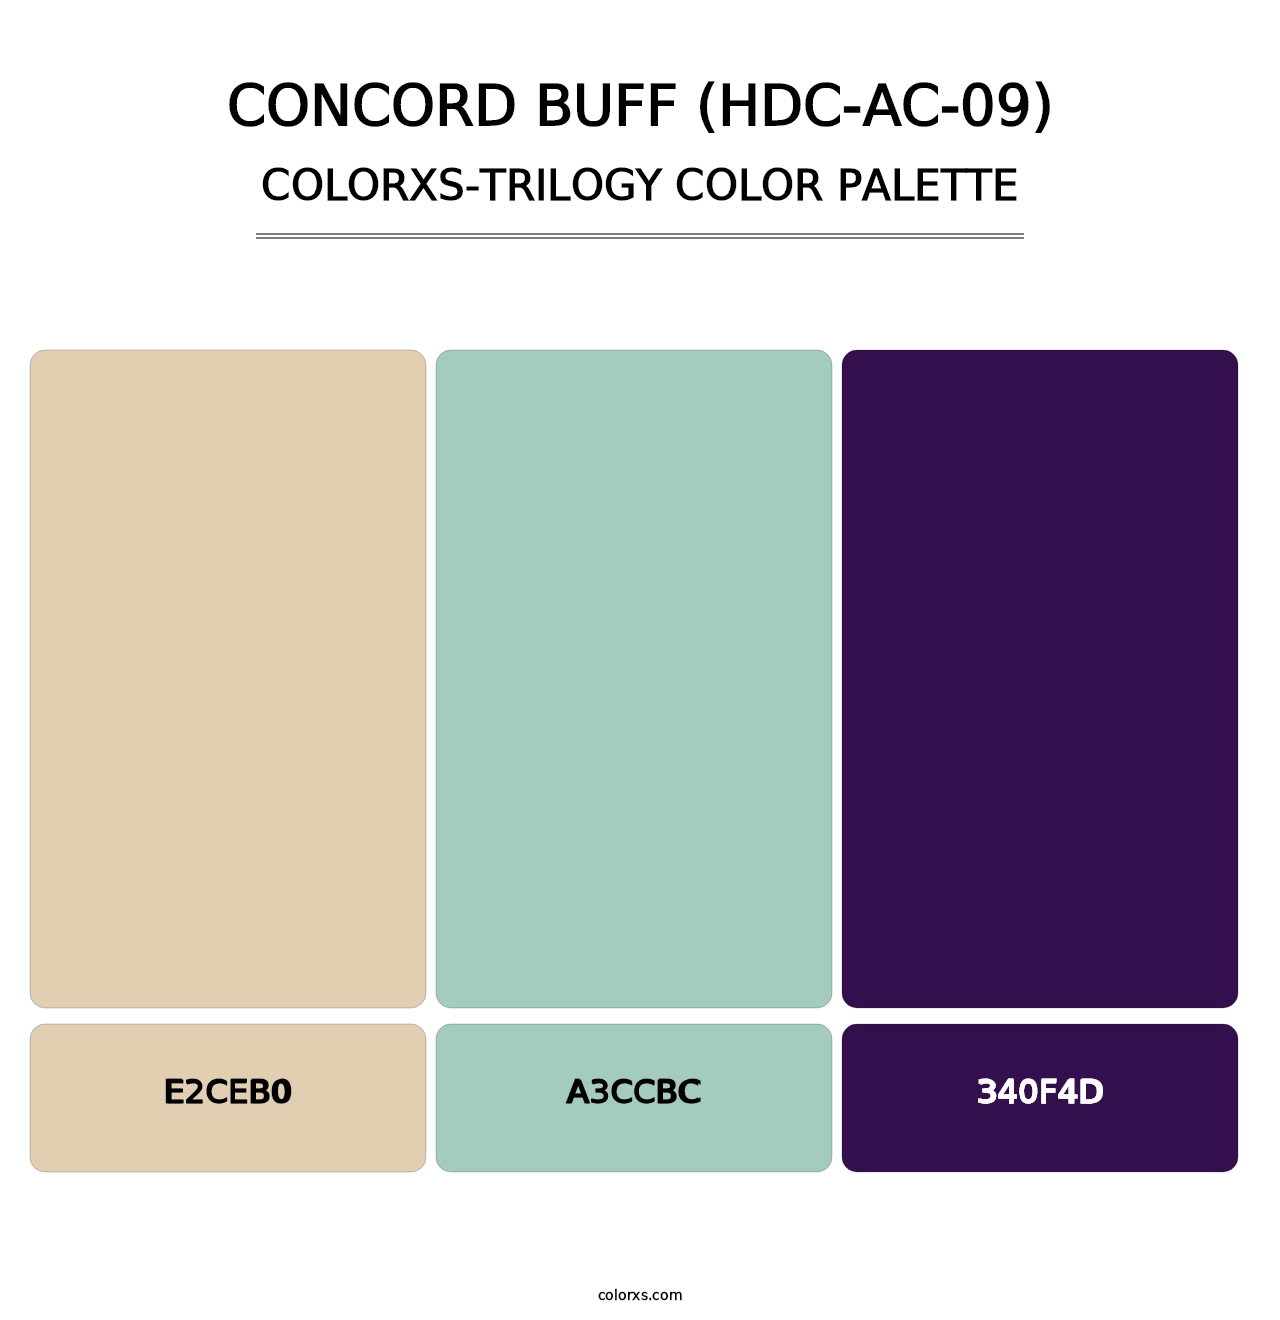 Concord Buff (HDC-AC-09) - Colorxs Trilogy Palette